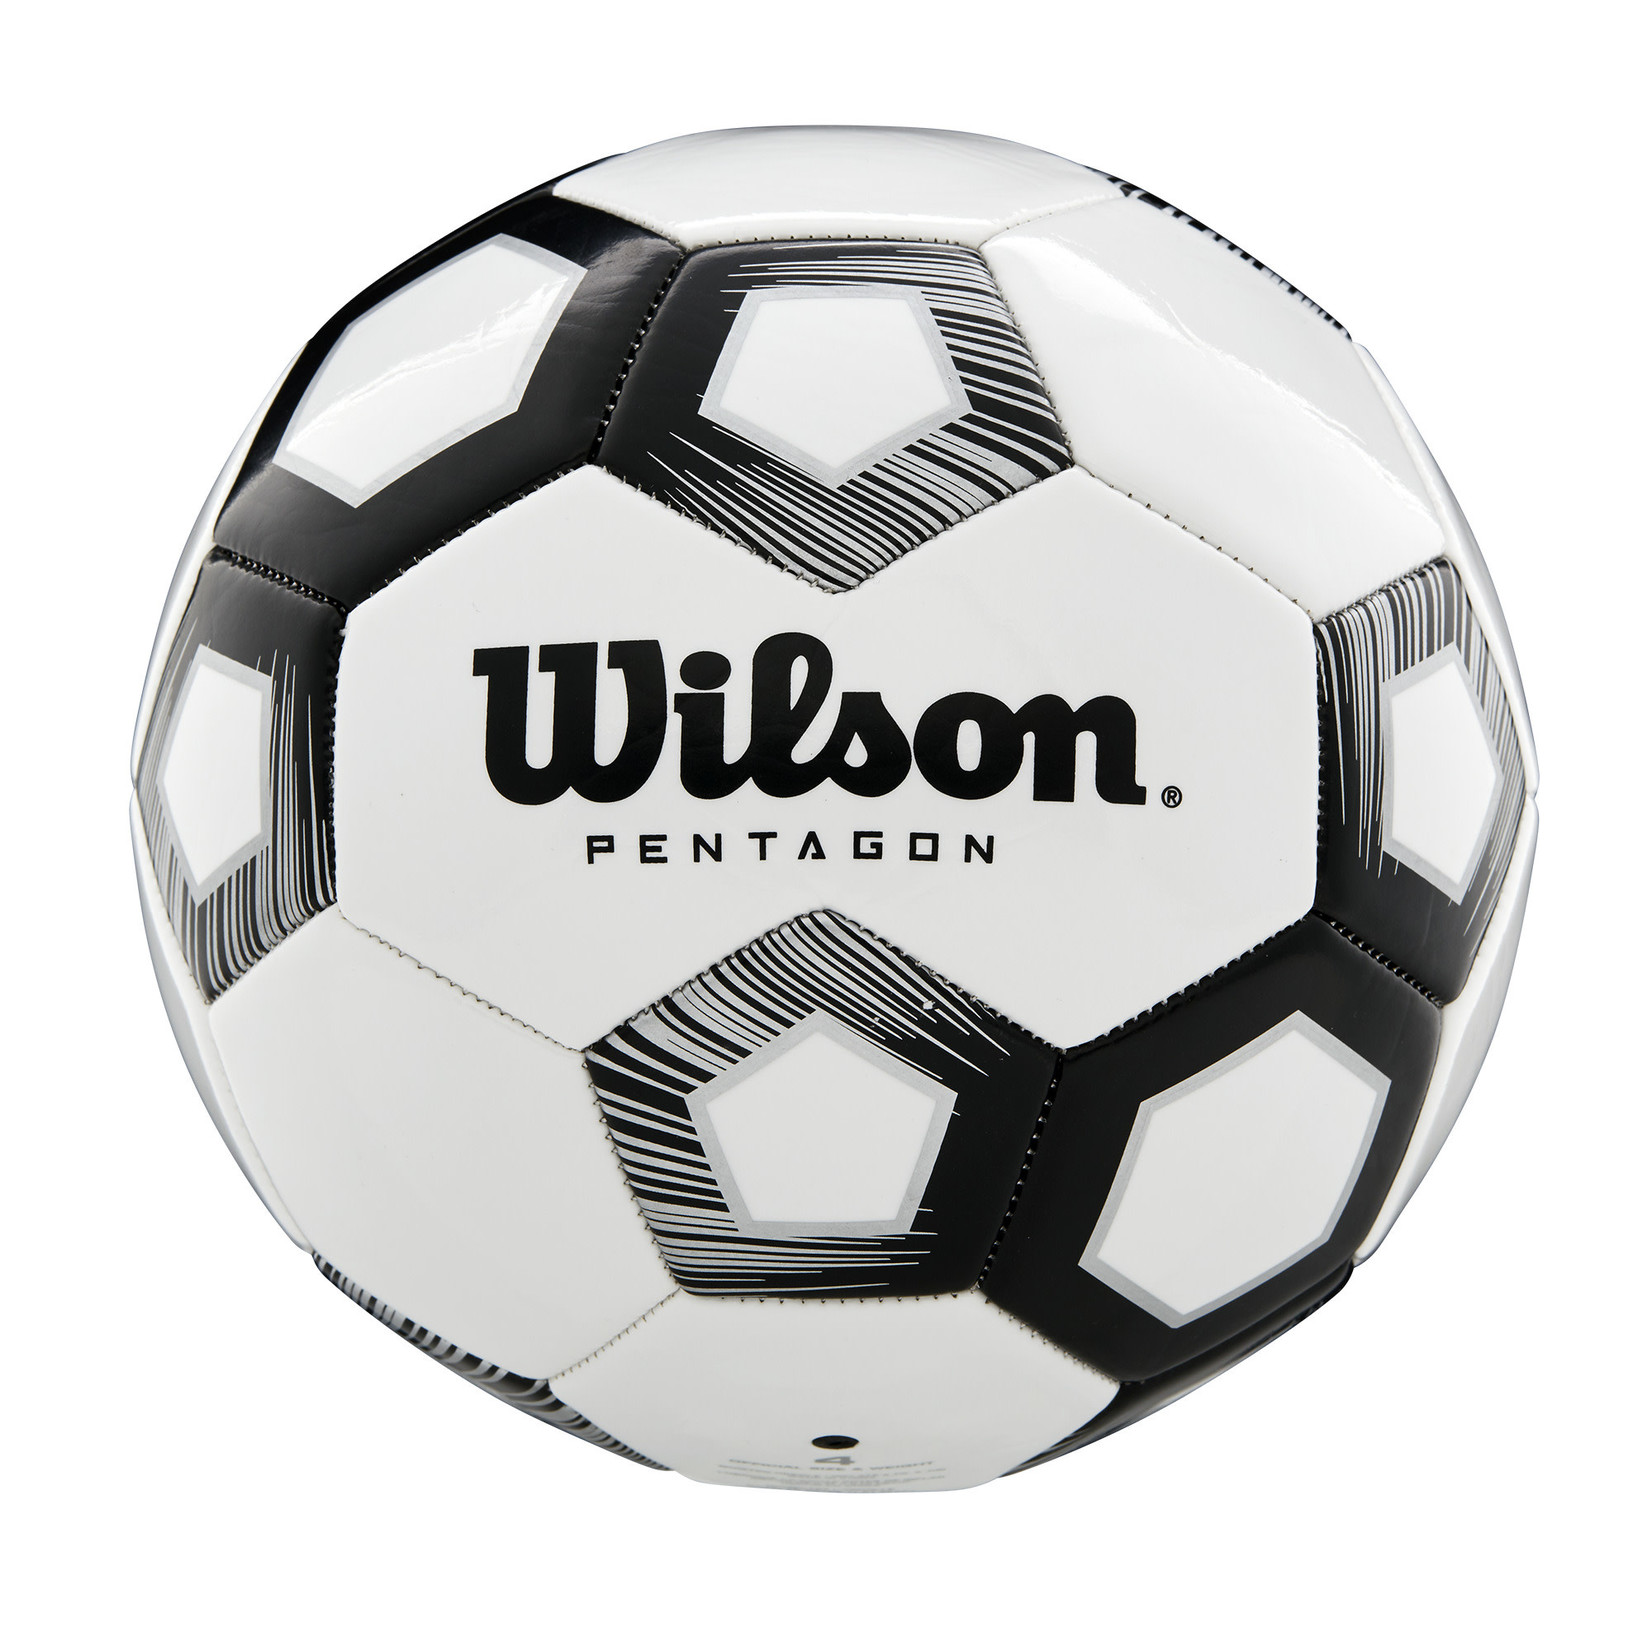 Wilson Wilson Pentagon - Soccer Ball